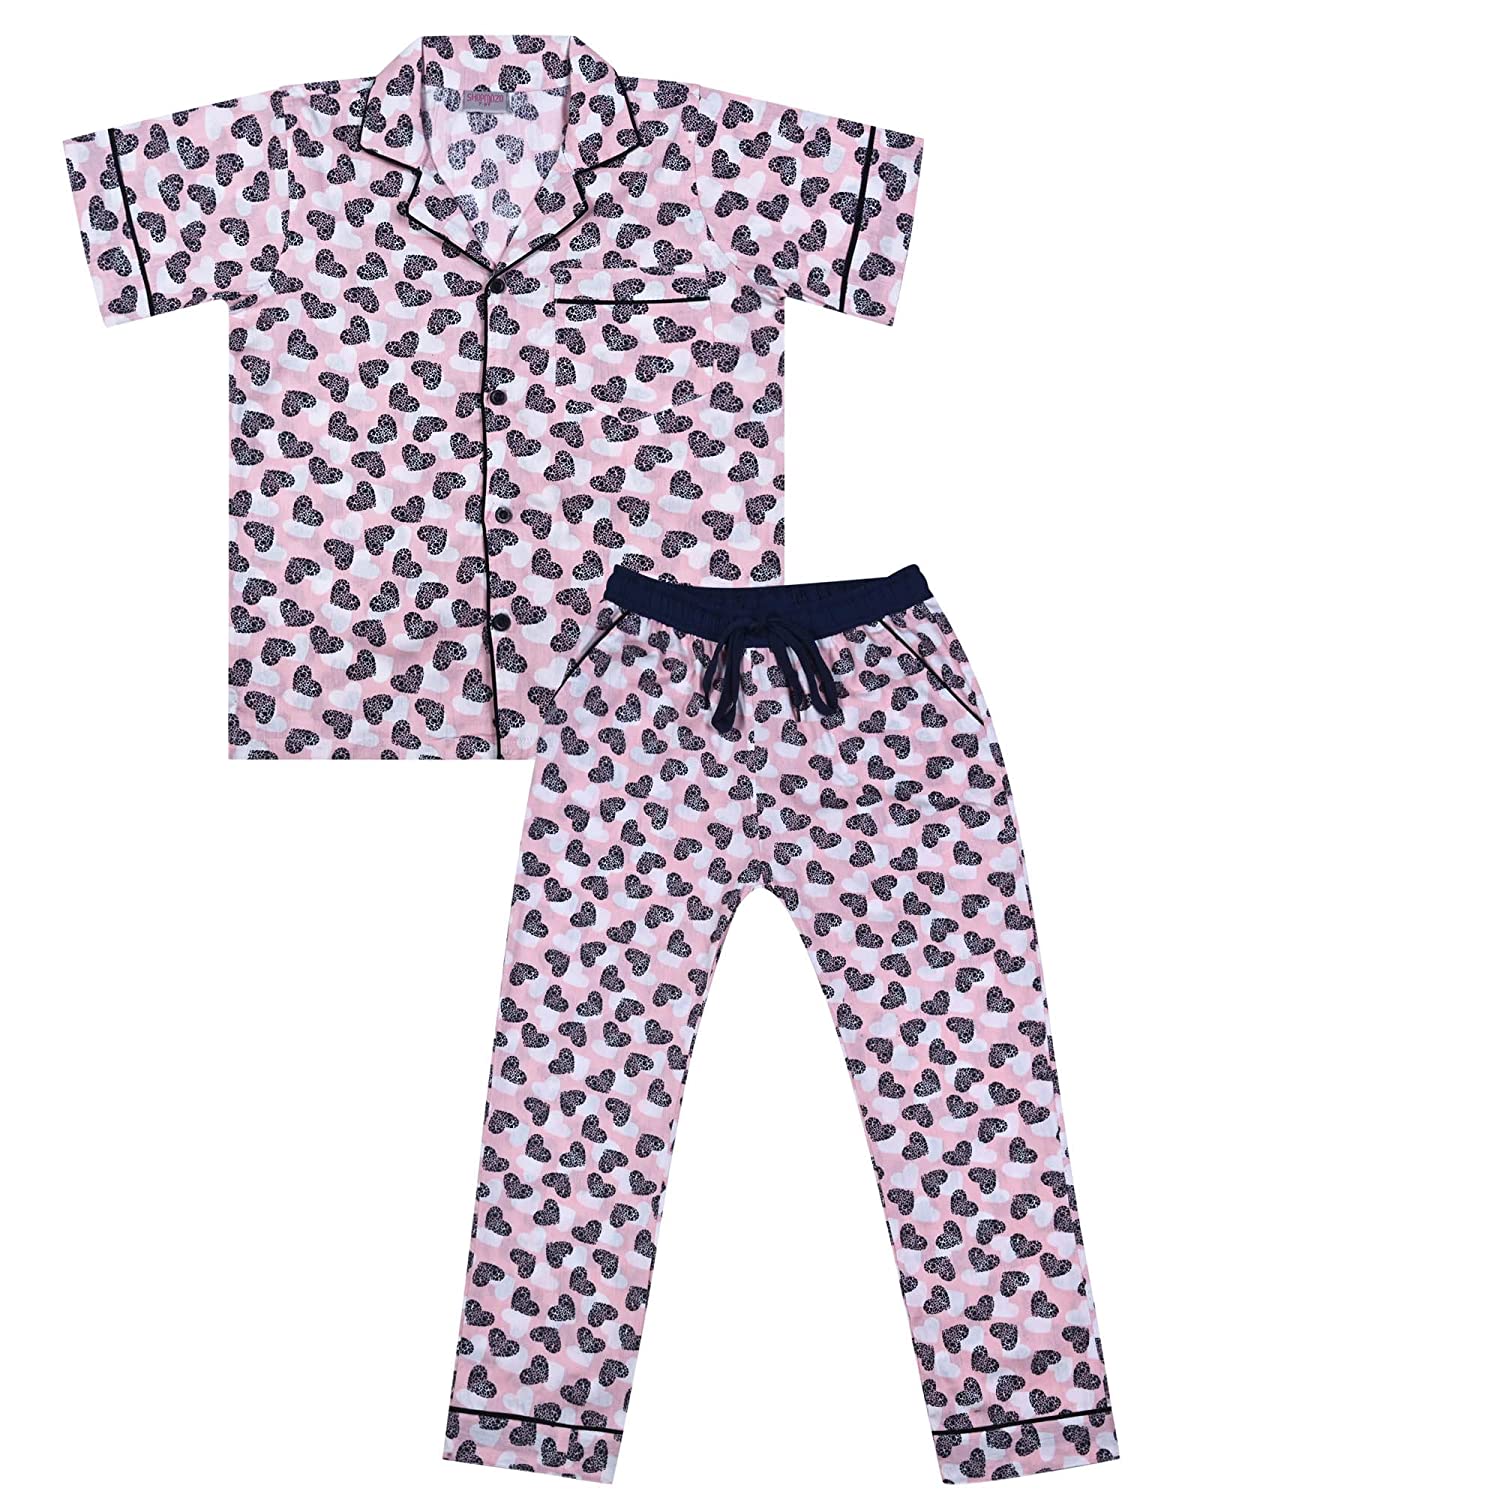 Shopmozo 100% Cotton Kids Sleep Wear Pajama Top Night Suit For Boys & Girls  (SM-002050_Parent) - ShopMozo